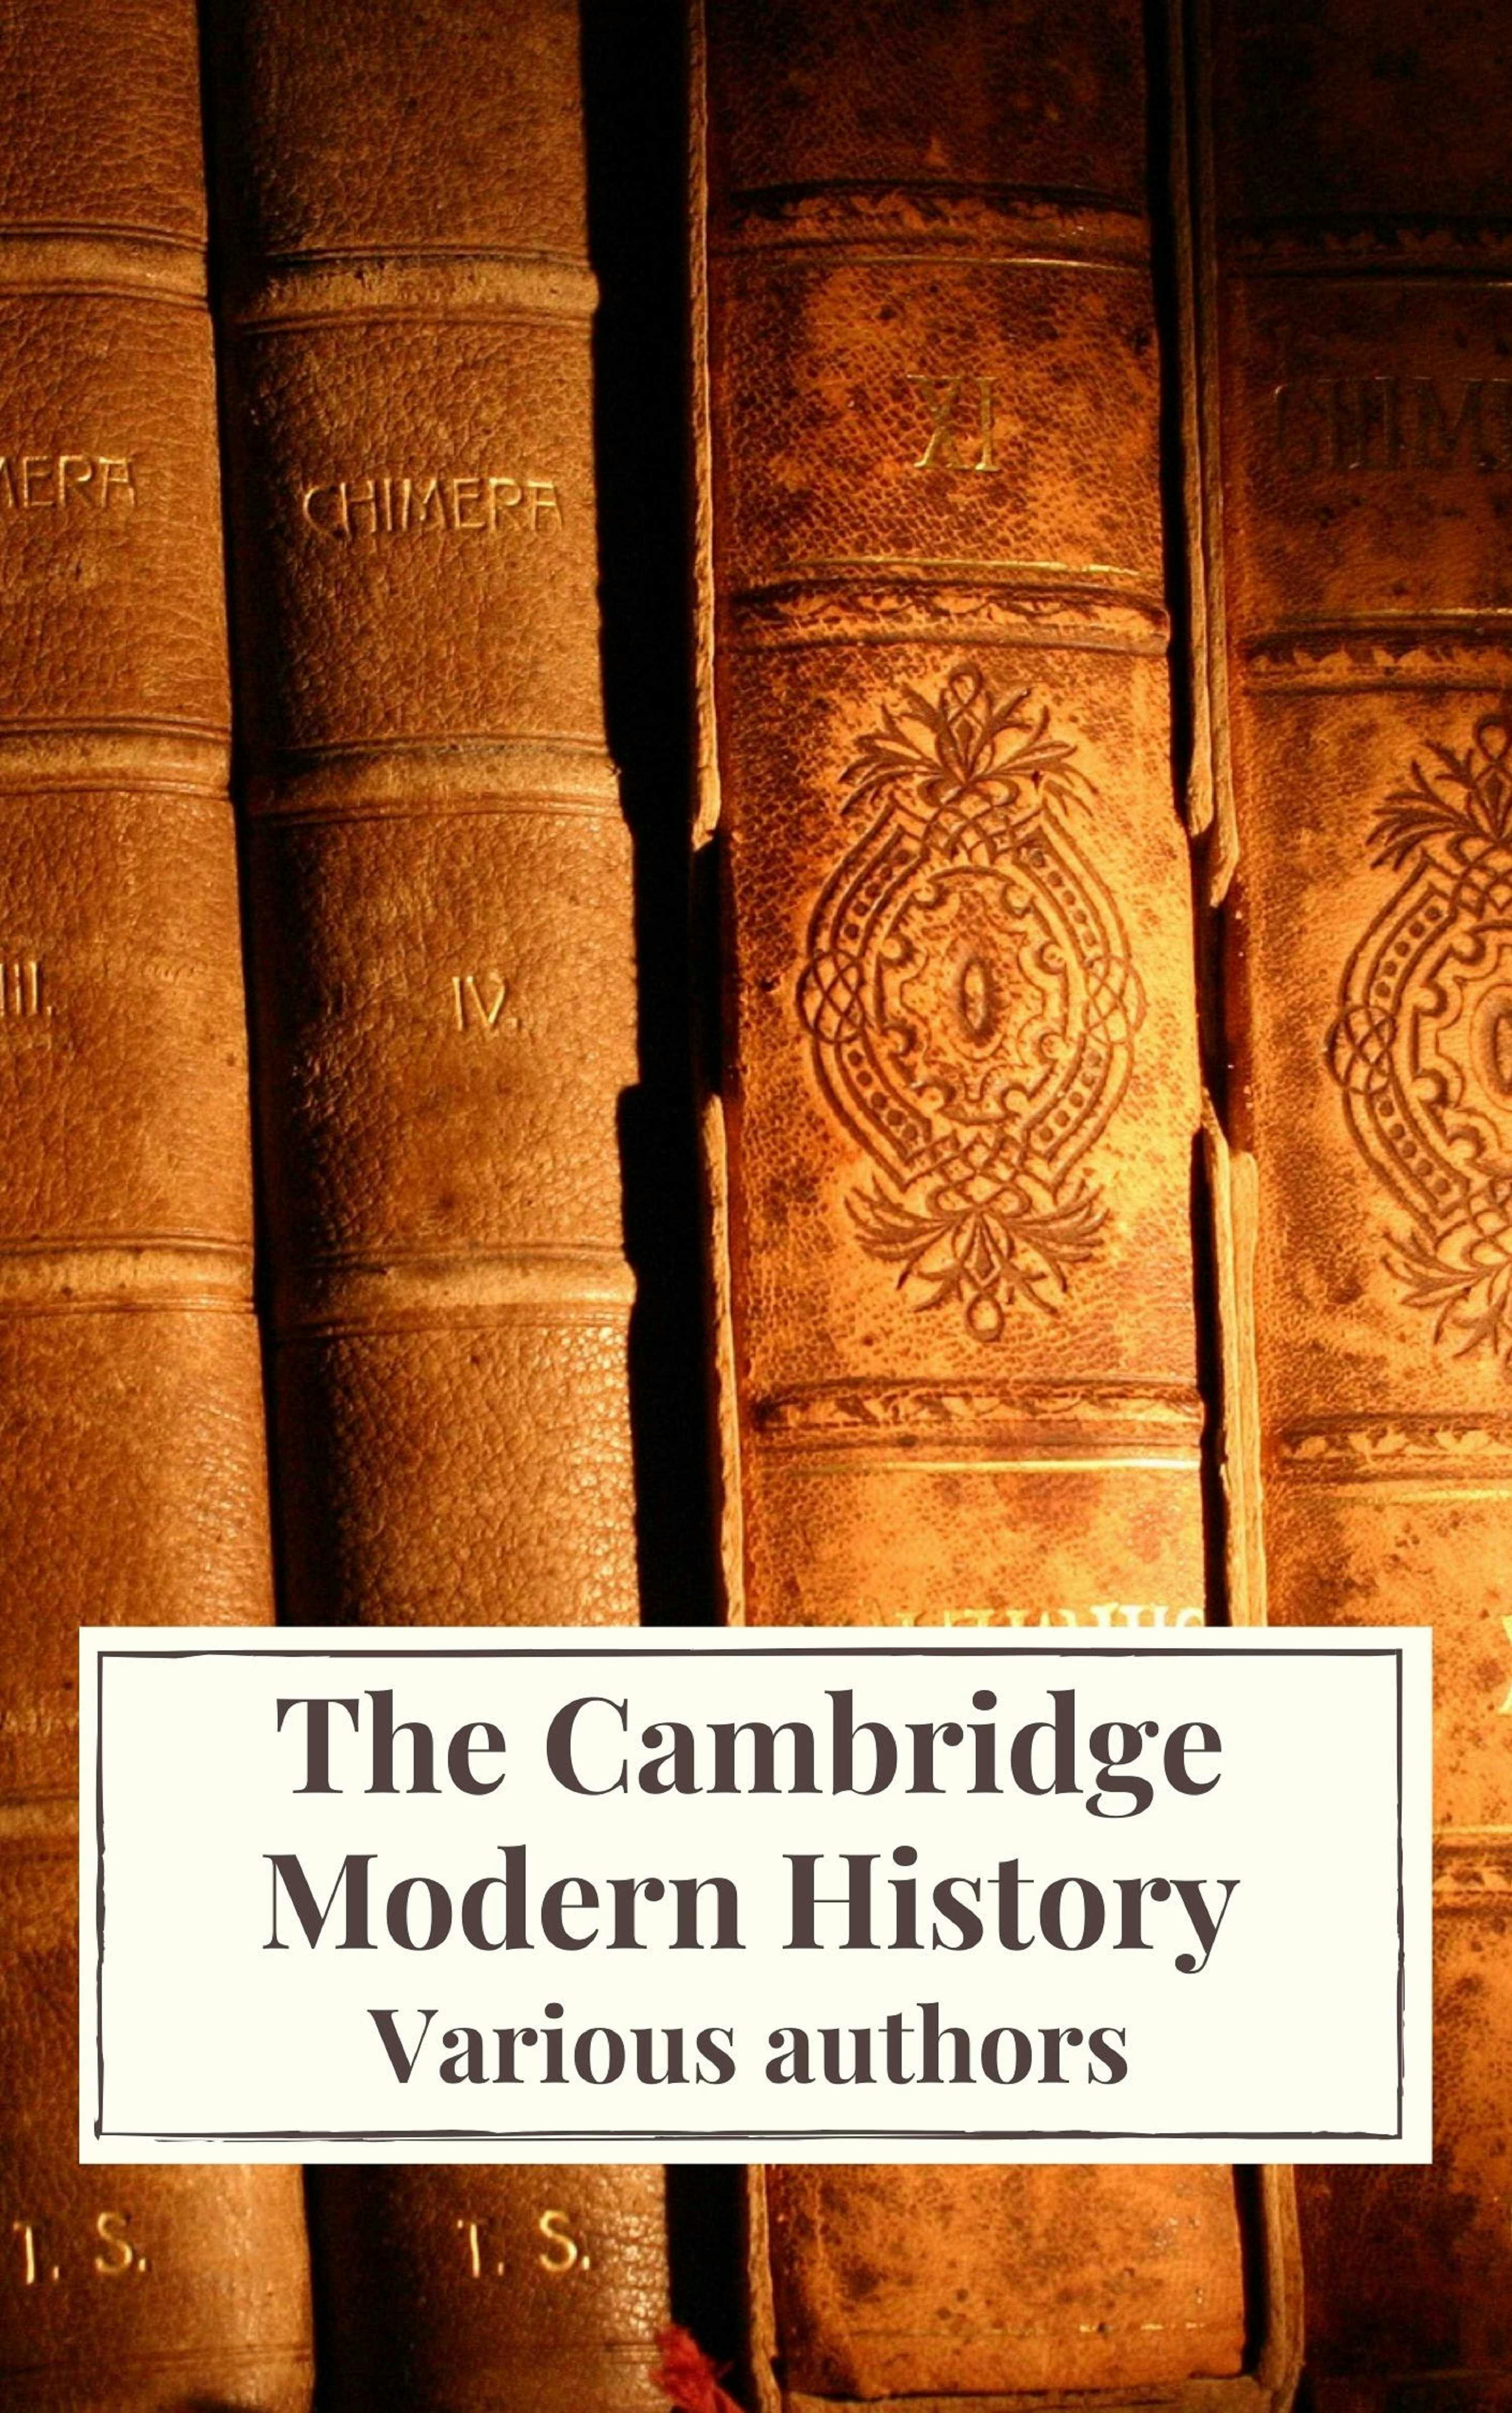 The Cambridge Modern History - Adolphus William Ward, R. Nisbet Bain, Icarsus, J.b. Bury, Lord Acton, Mandell Creighton, G. W. Prothero